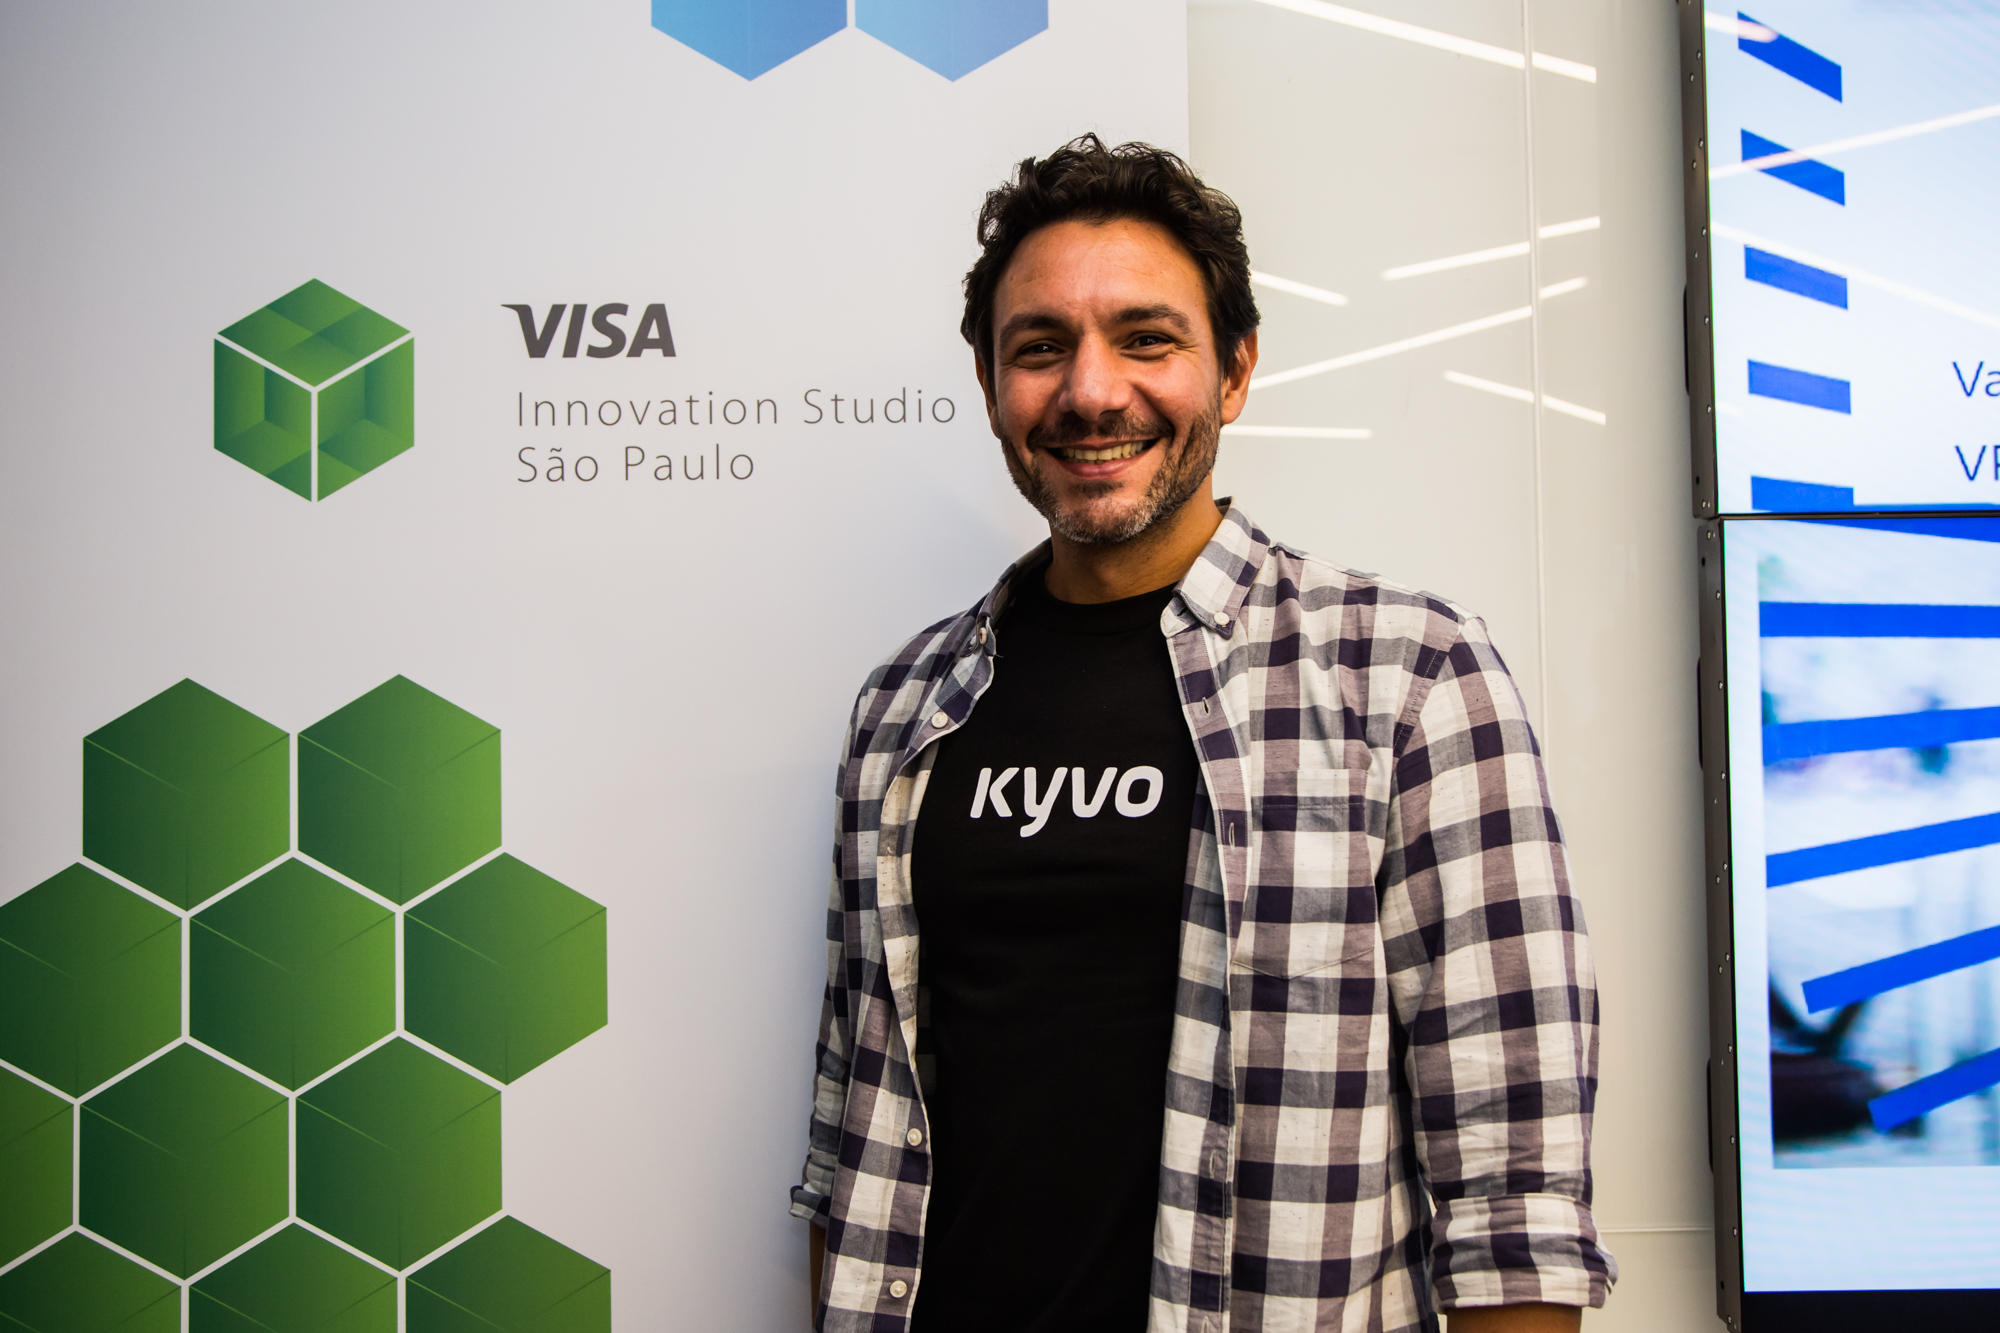 Visa Innovation Studio São Paulo